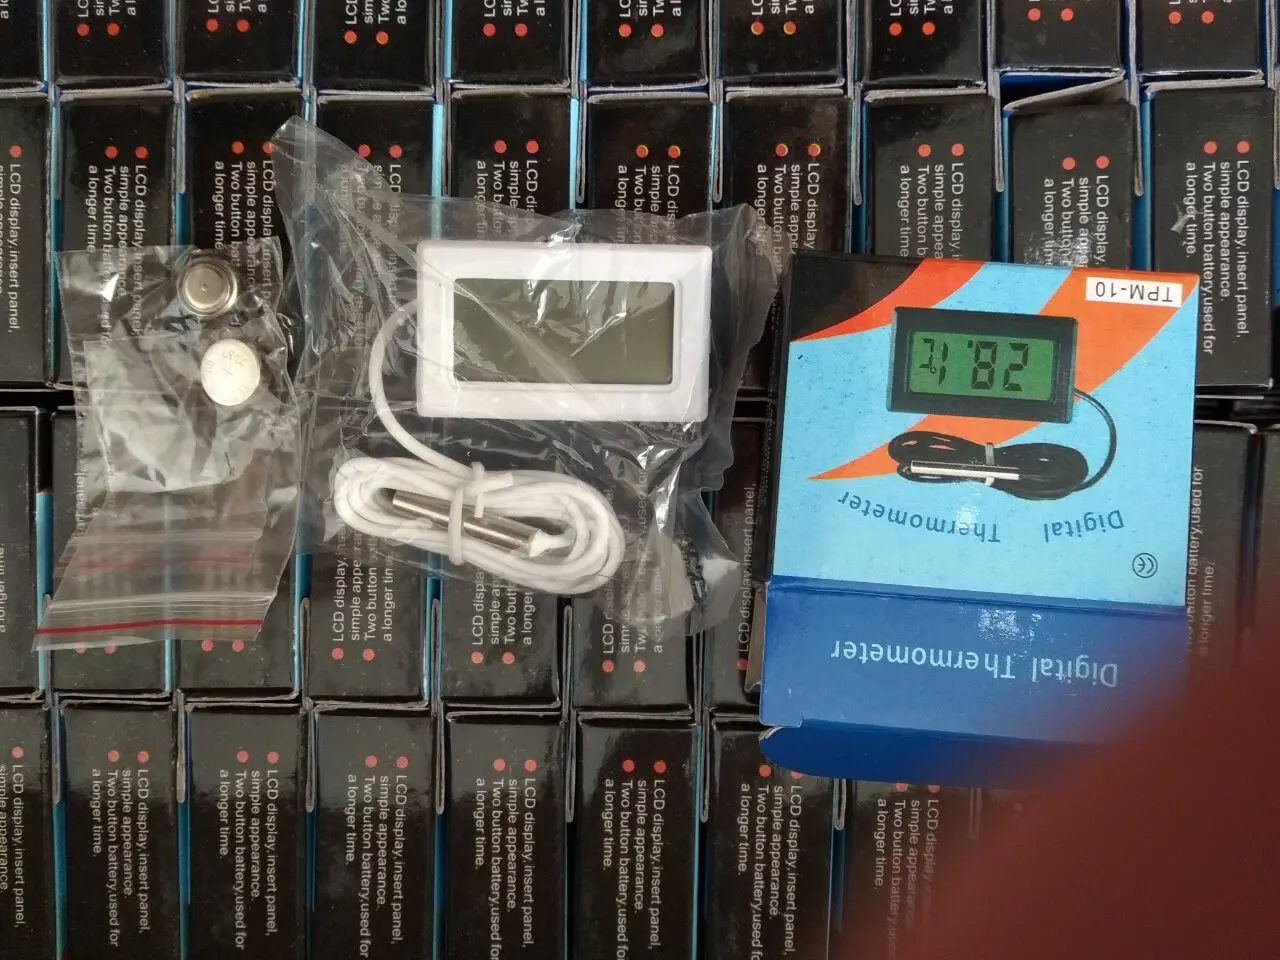 Mini Digital Fish Tank Aquarium Thermometer with -50-70 degree C